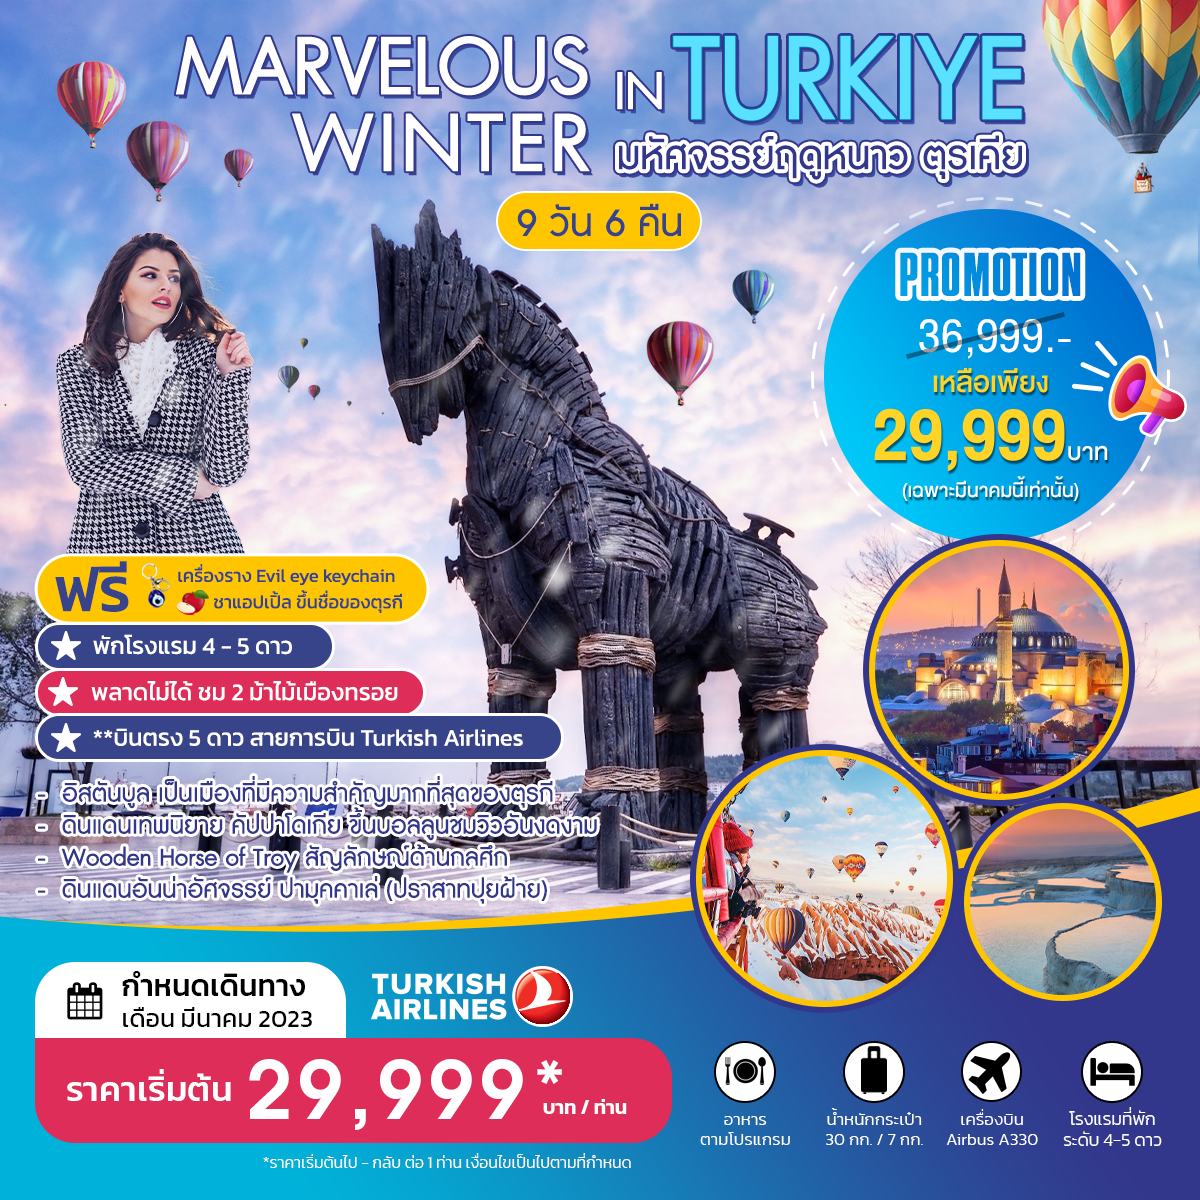 MARVELOUS WINTER IN TURKIYE มหัศจรรย์ฤดูหนาว ตุรเคีย PRO มีนาคม 2023